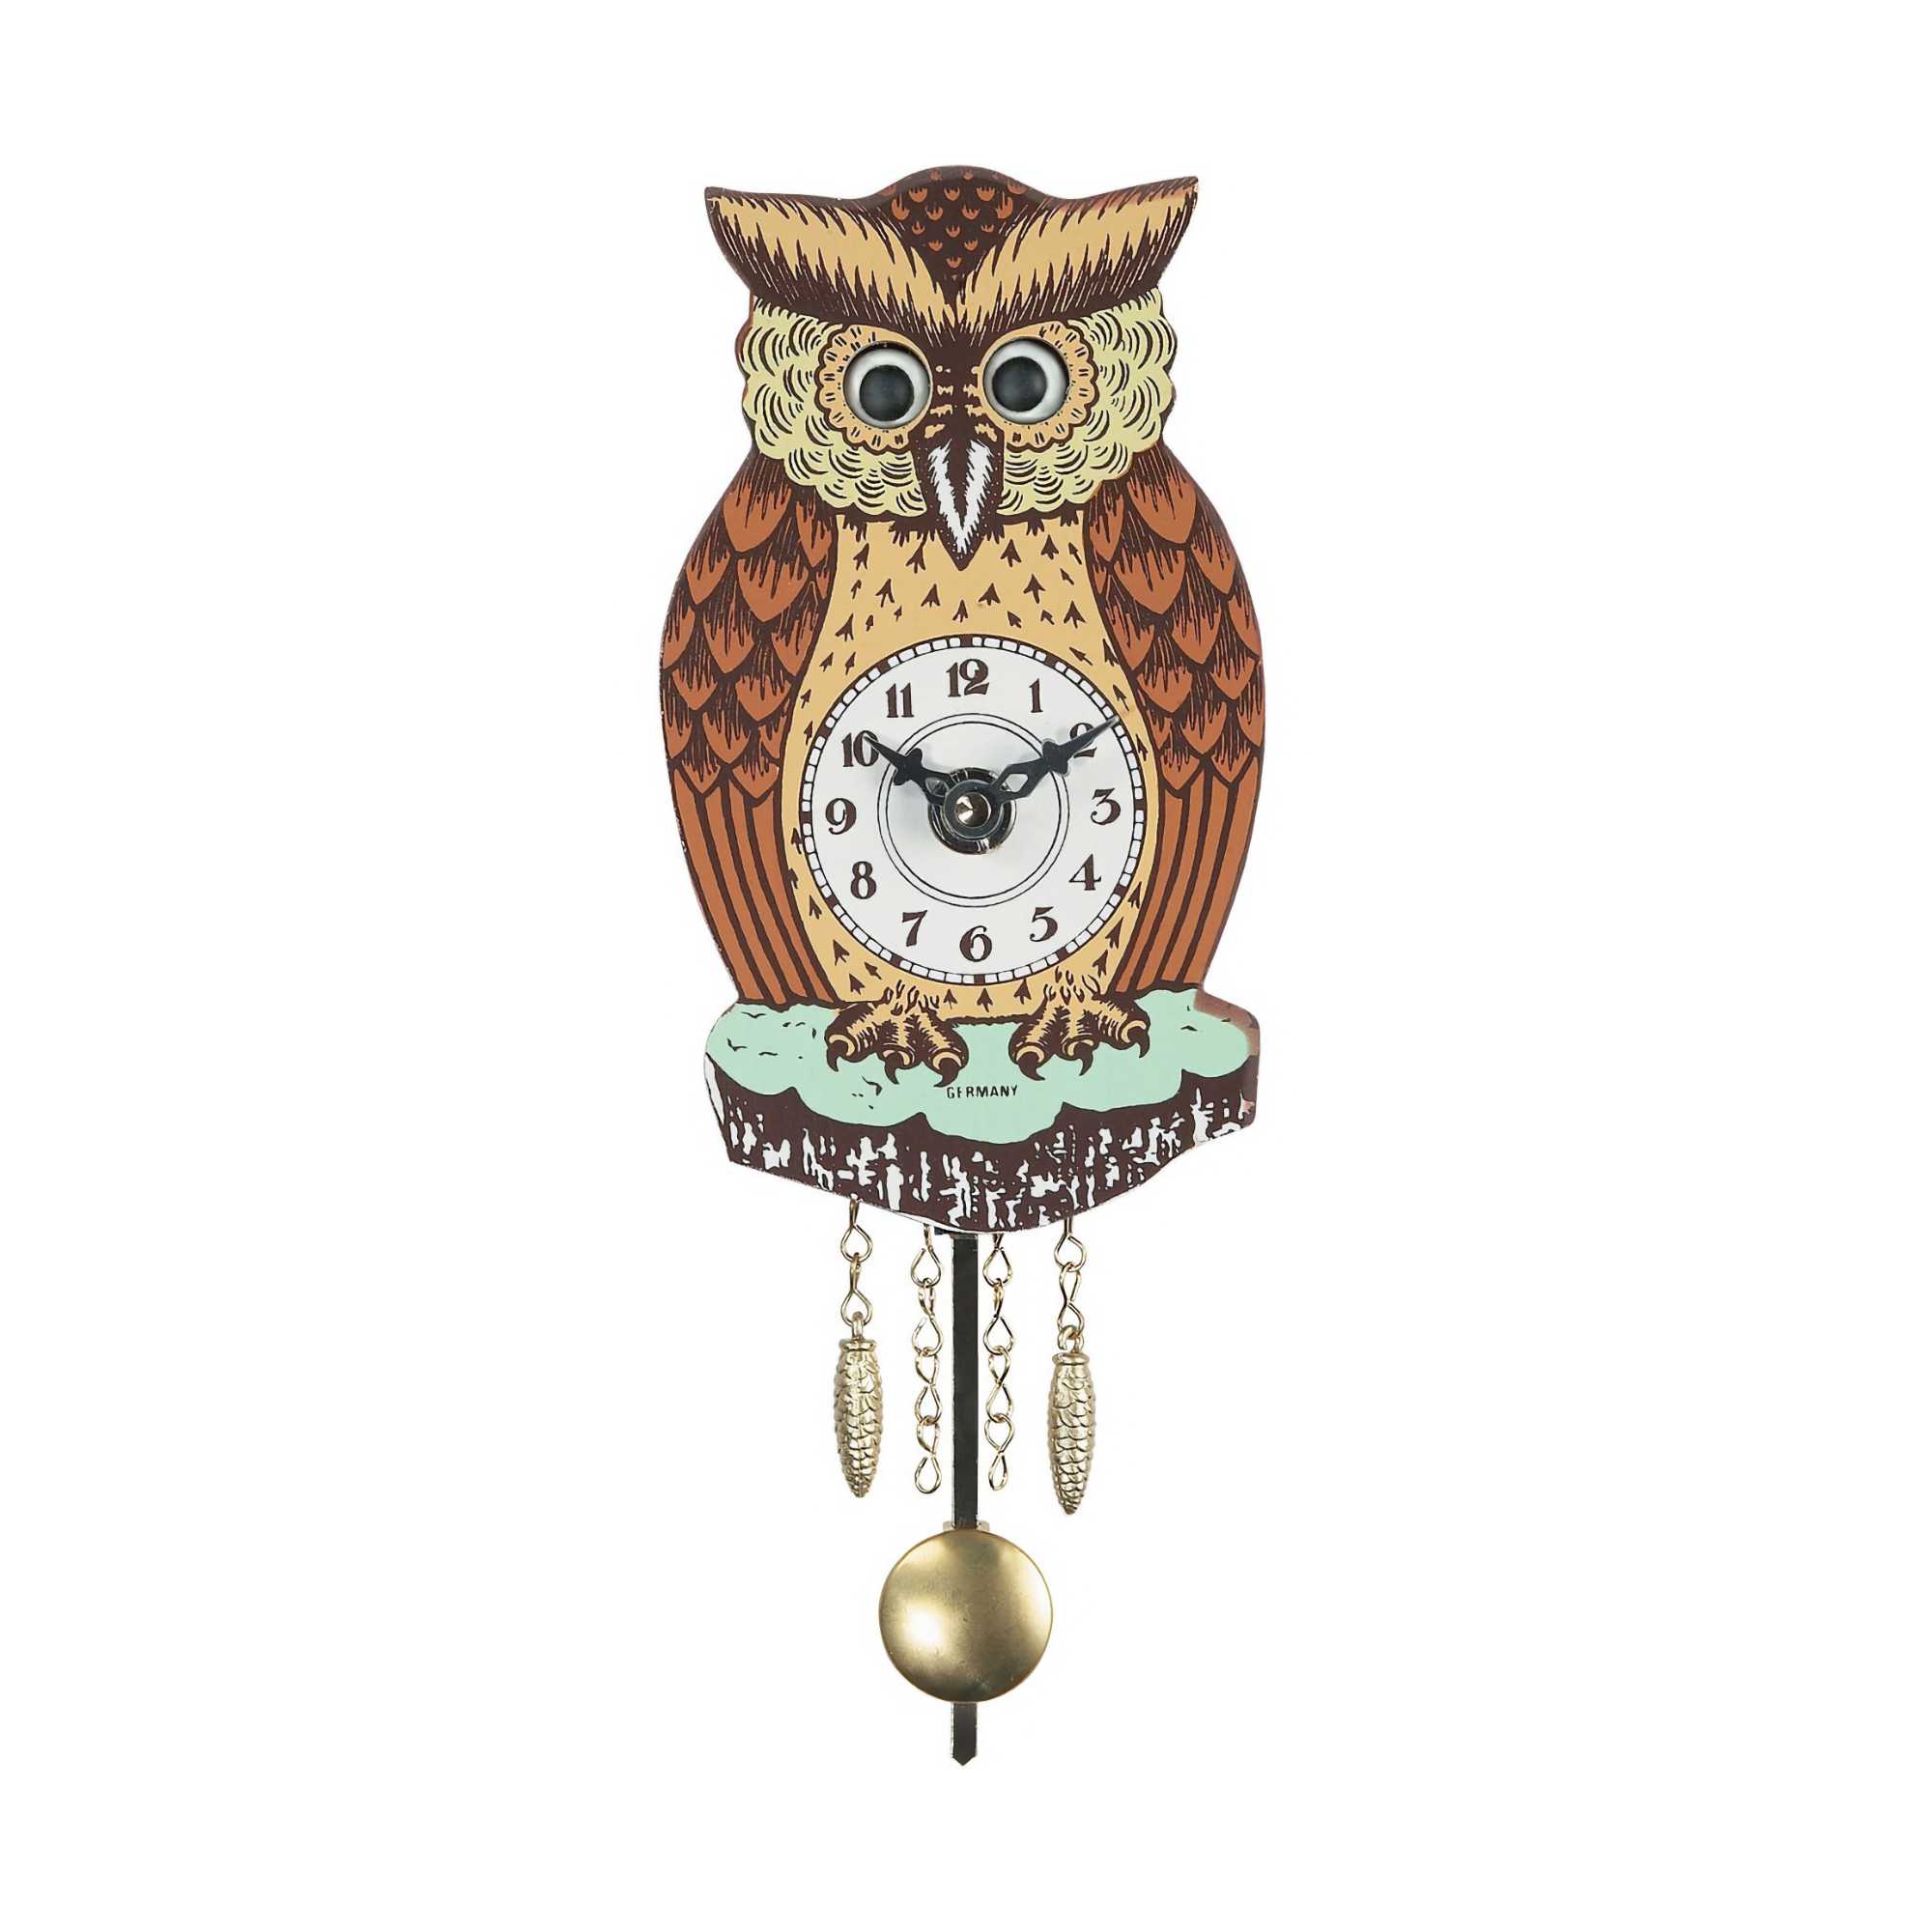 Engstler Quartz Owl Clock 201QP